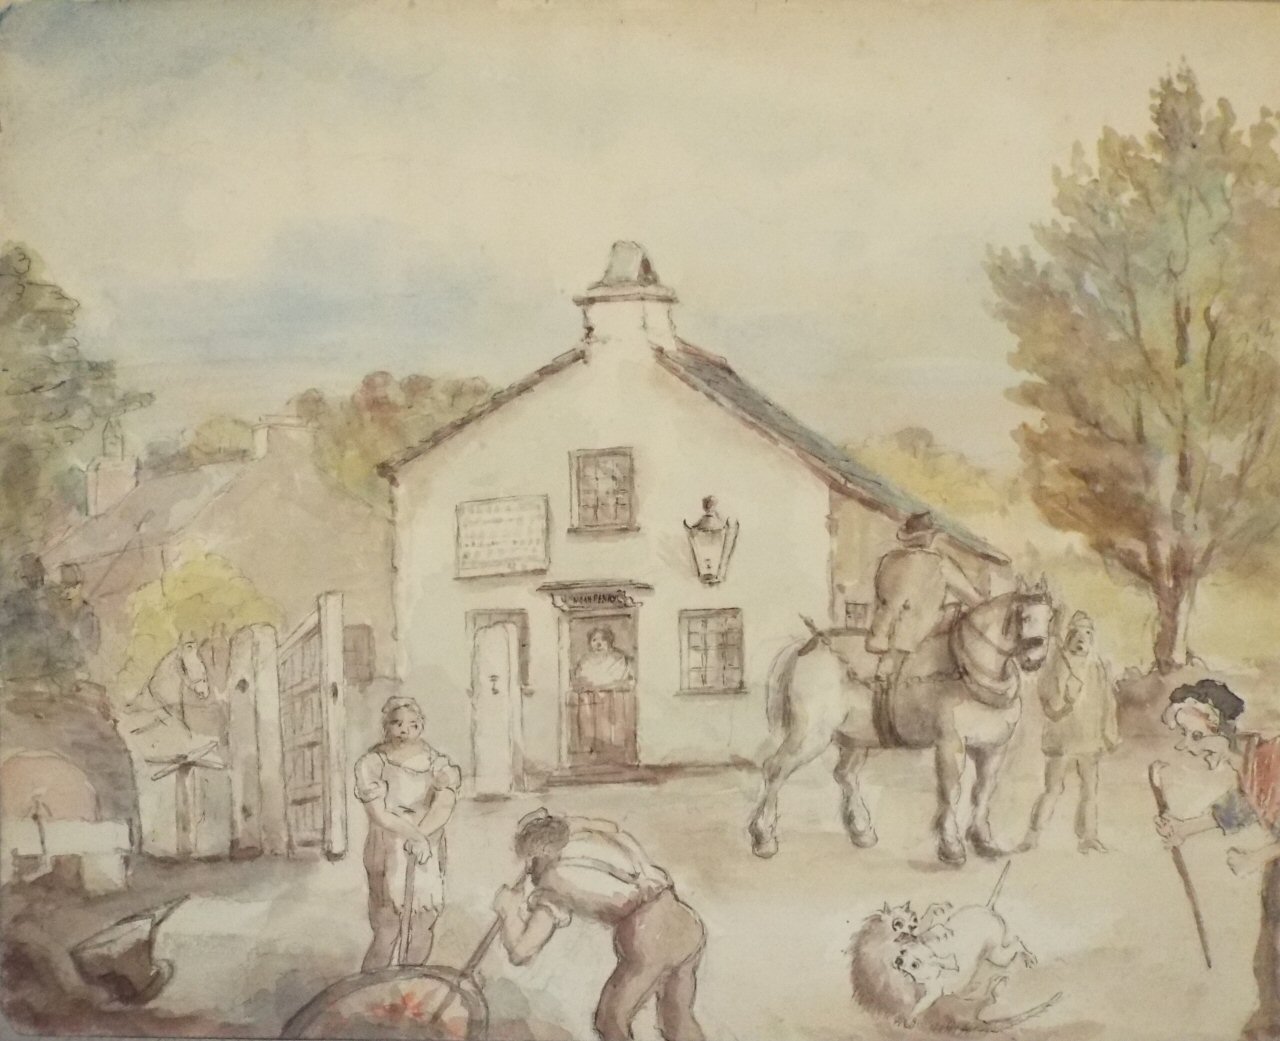 Watercolour - Cartoon village scene with blacksmith's and Inn